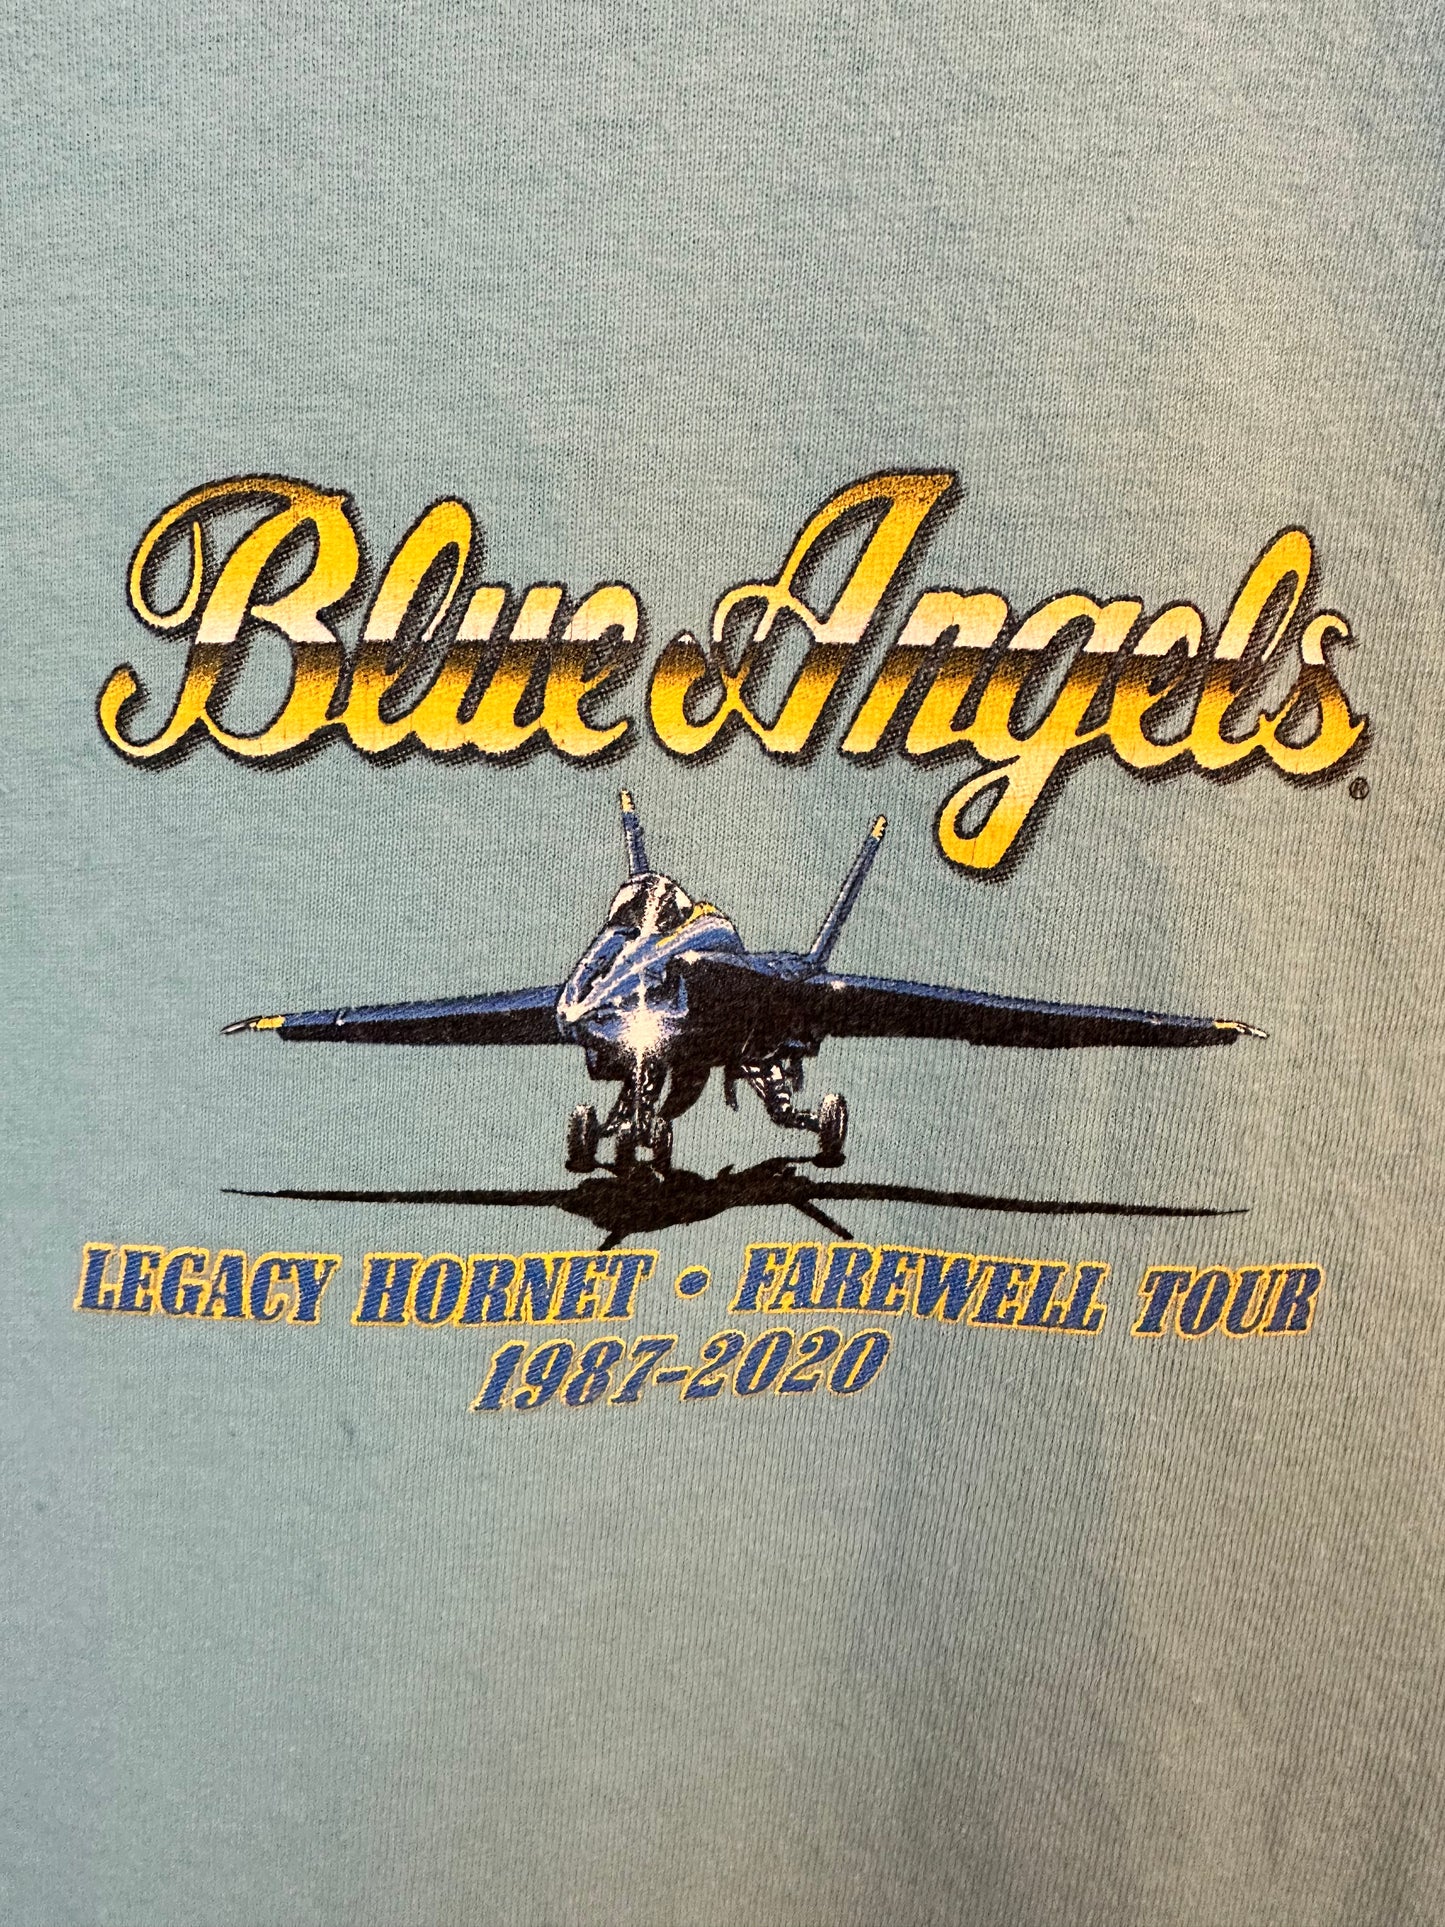 Blue Angels Anniversary Camiseta